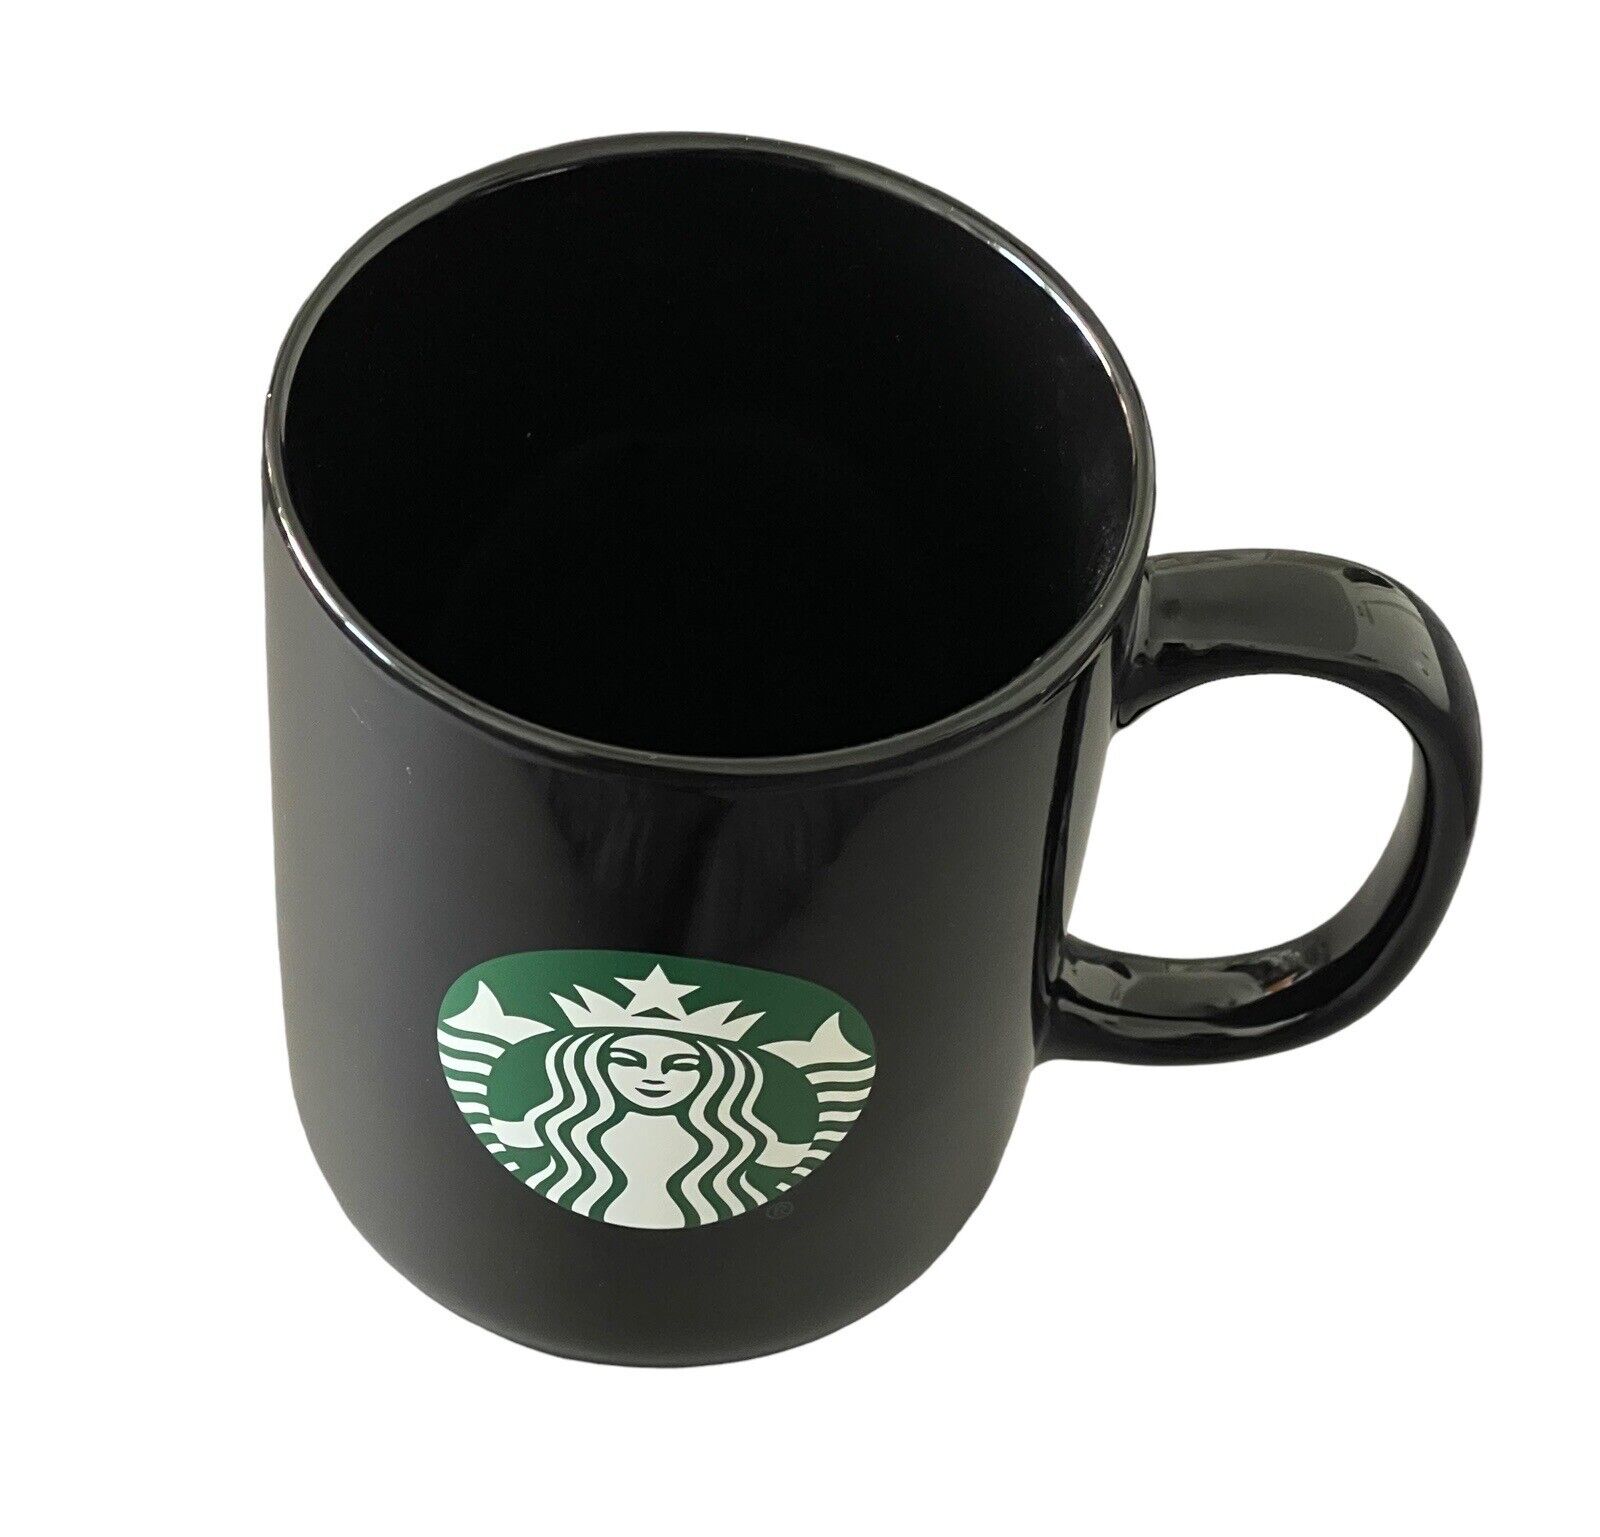 Starbucks Coffee Tea Black Mug Cup 2021 Green and White Mermaid Logo 15 Oz NEW